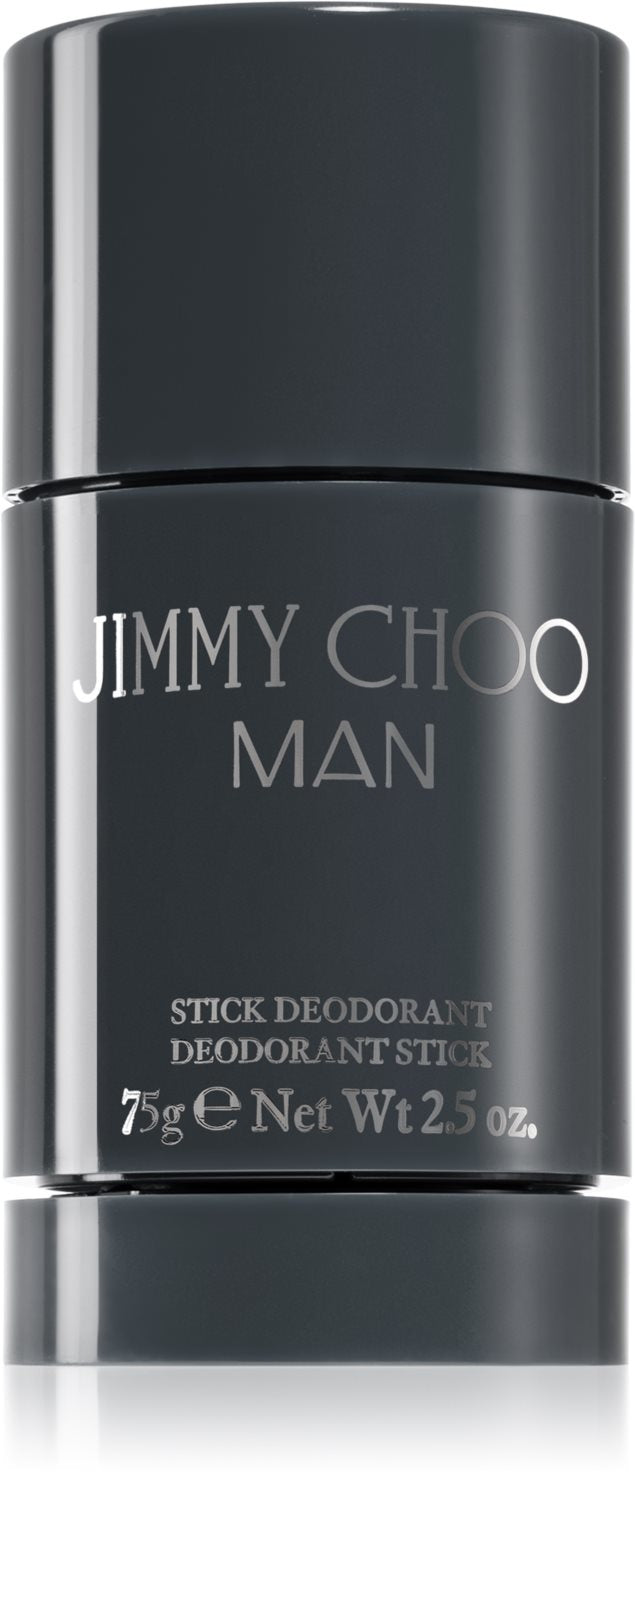 Man Deodorant Stick